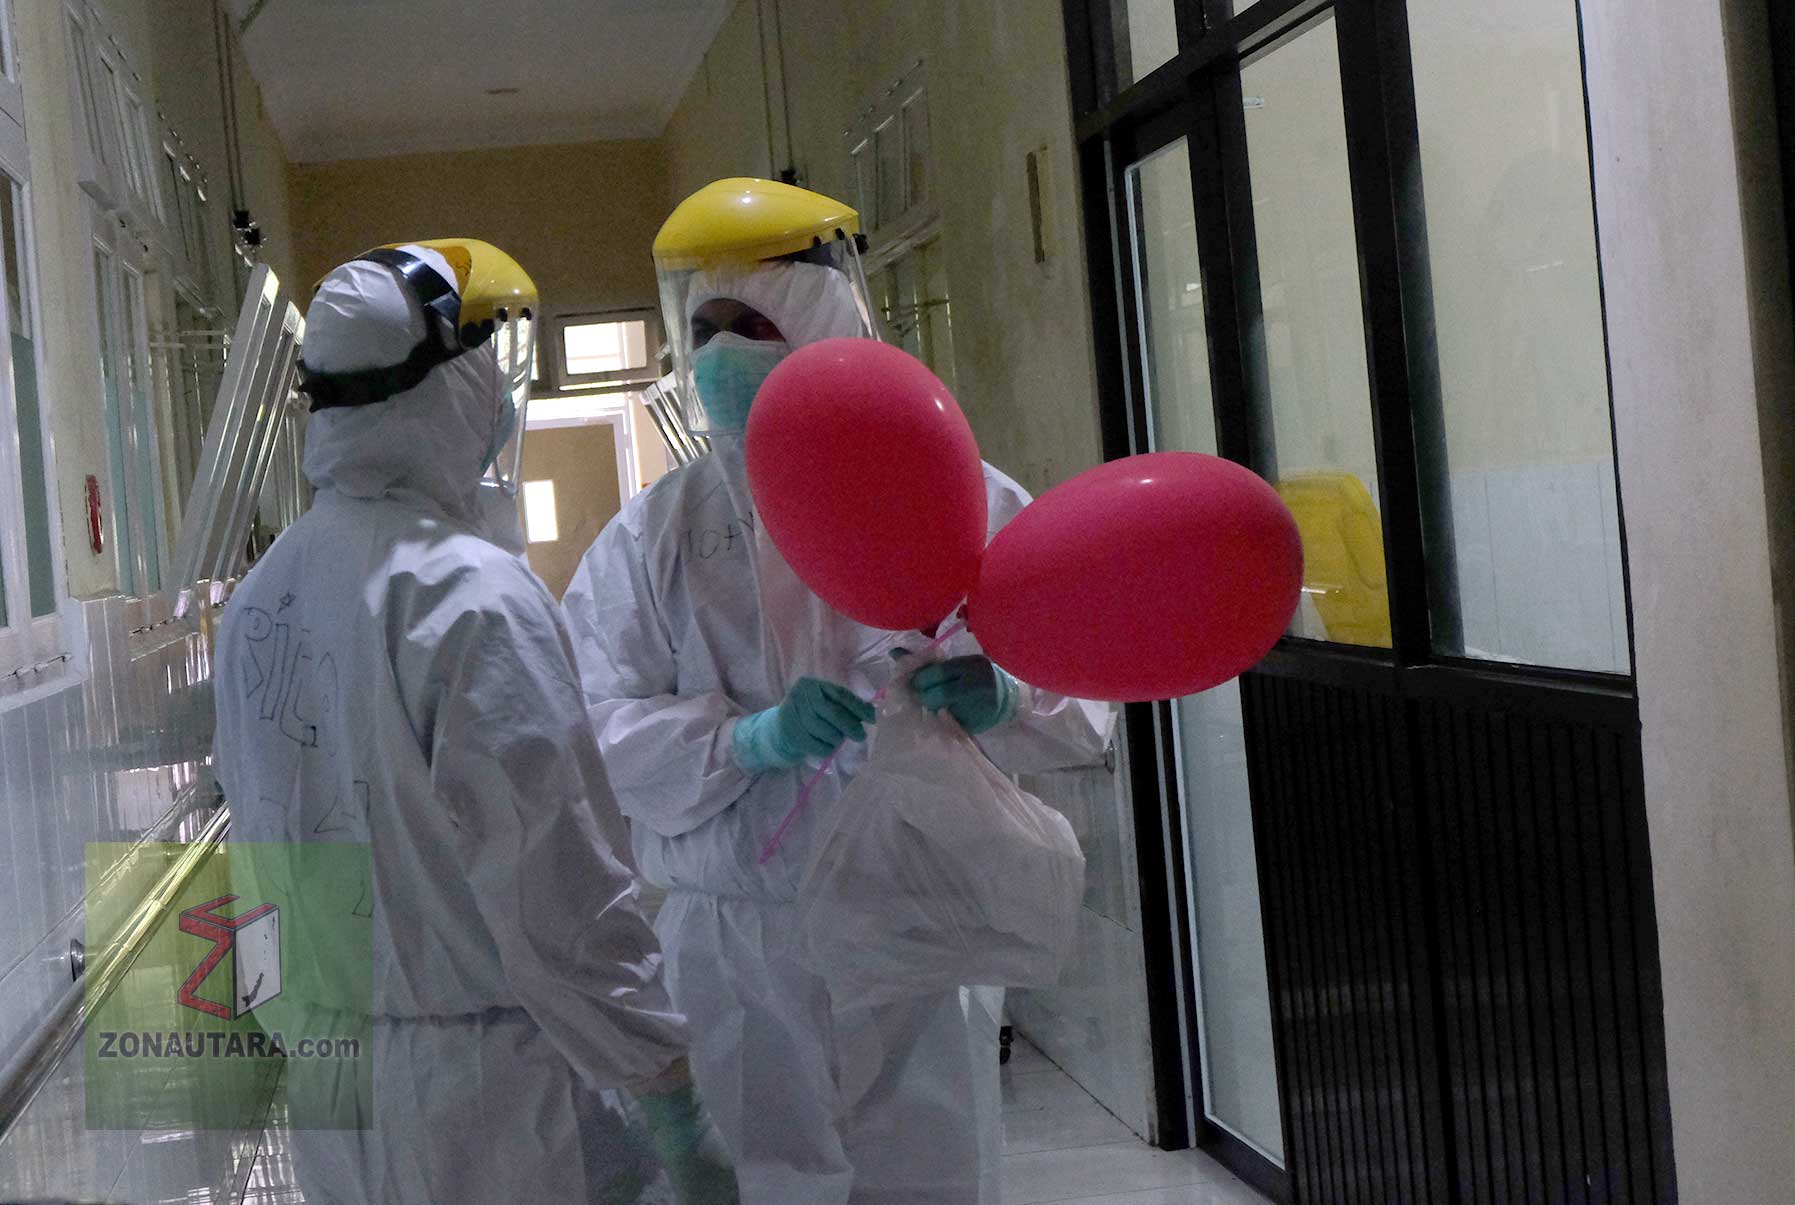 Petugas medis di RSUP Prof Kandou Manado membawa balon pemberian warga yang mensupport pasien covid-19. (Foto: Zonautara.com/Ronny A. Buol)